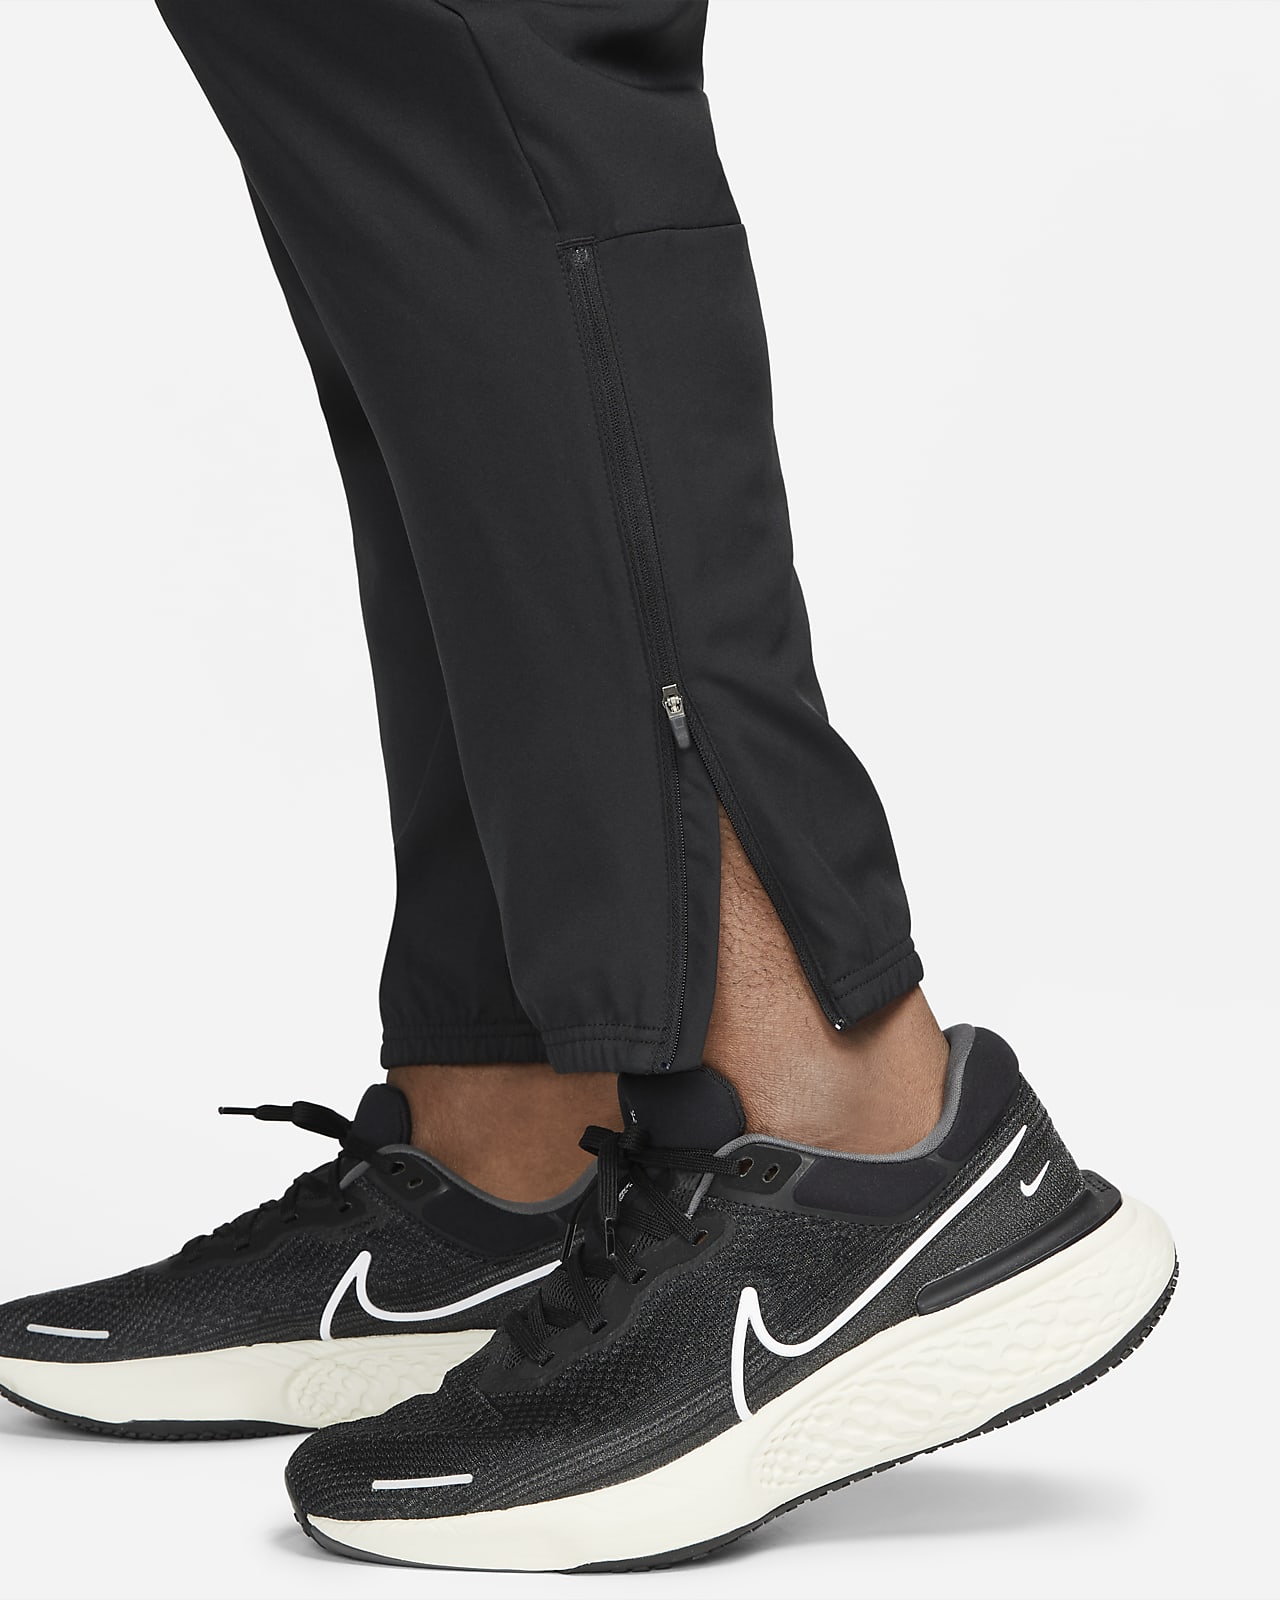 Pantalon Dri-FIT Nike Yoga pour homme. Nike LU